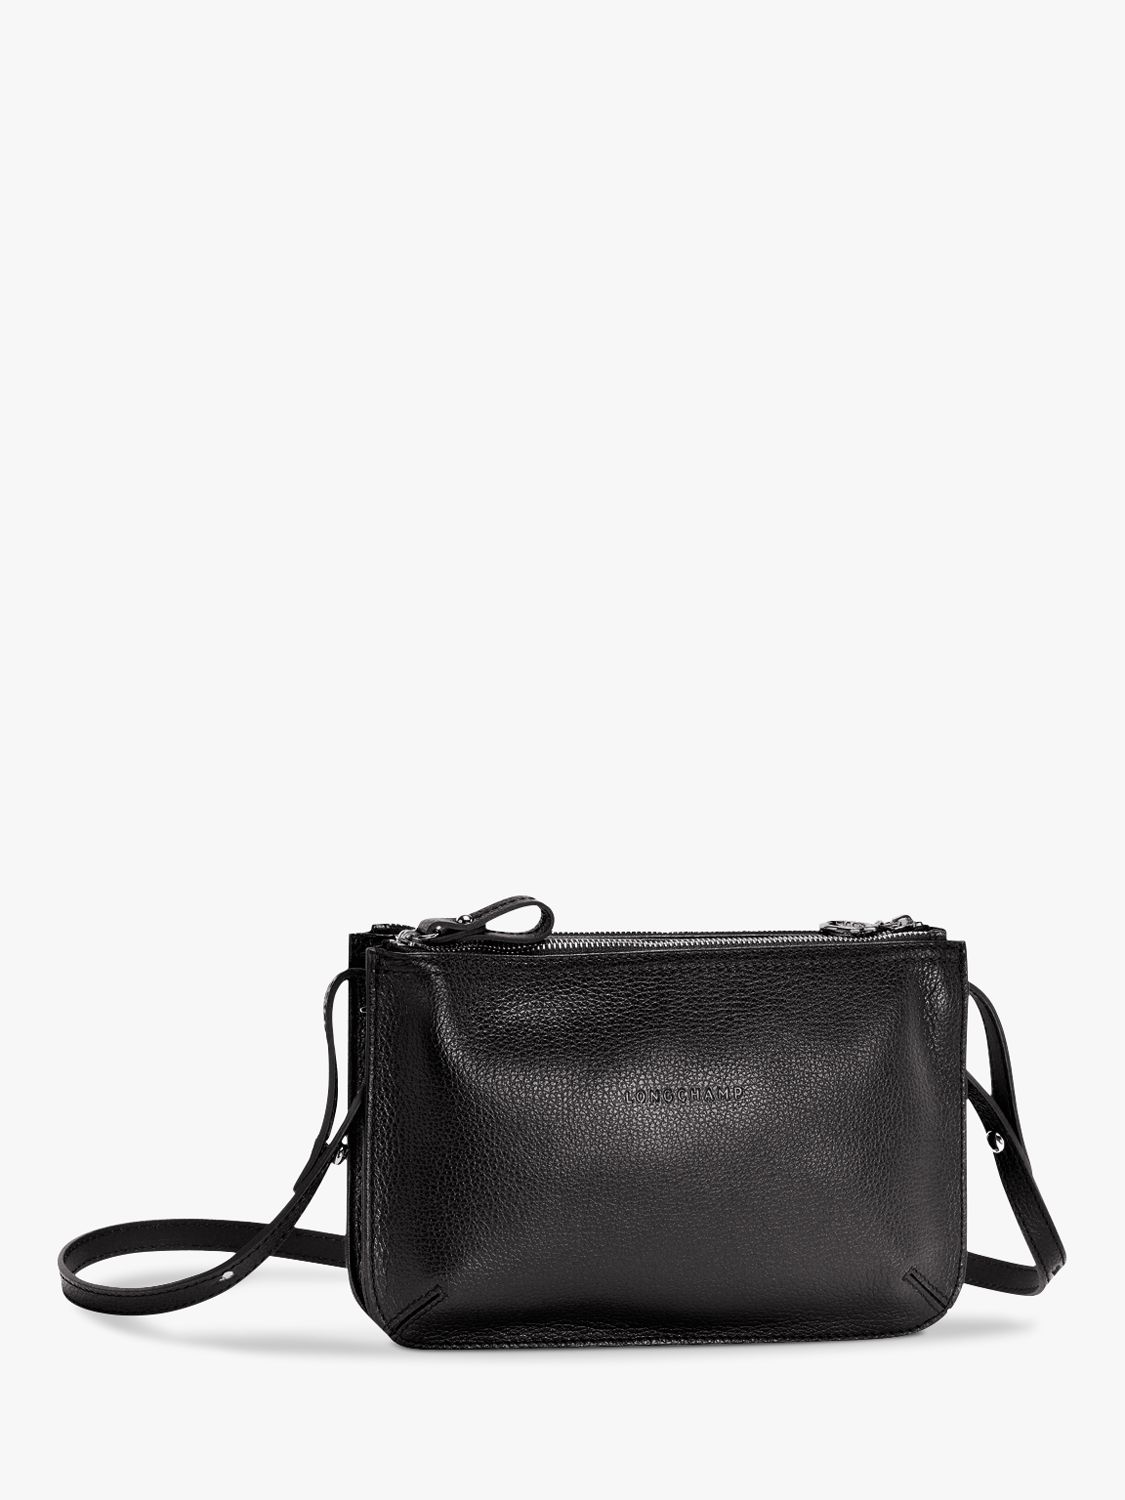 longchamp black leather crossbody bag